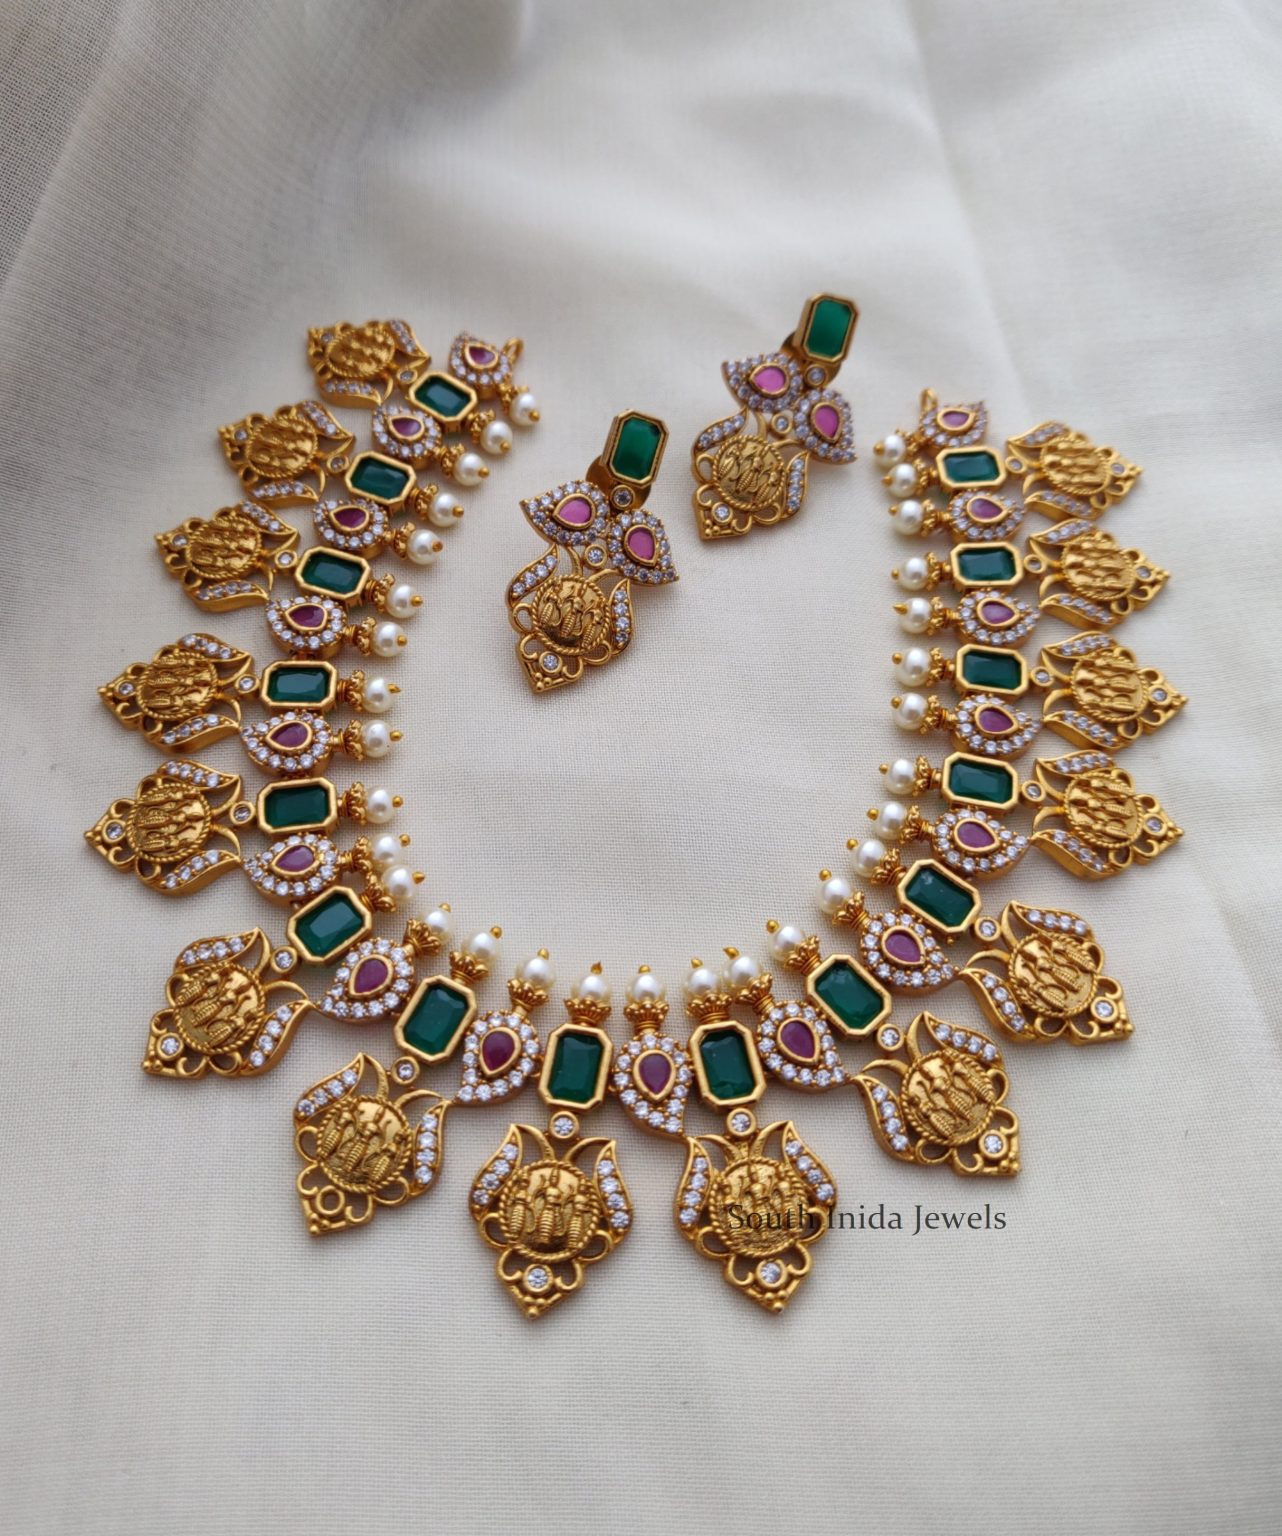 Amazing Ram Parivar Necklace - South India Jewels